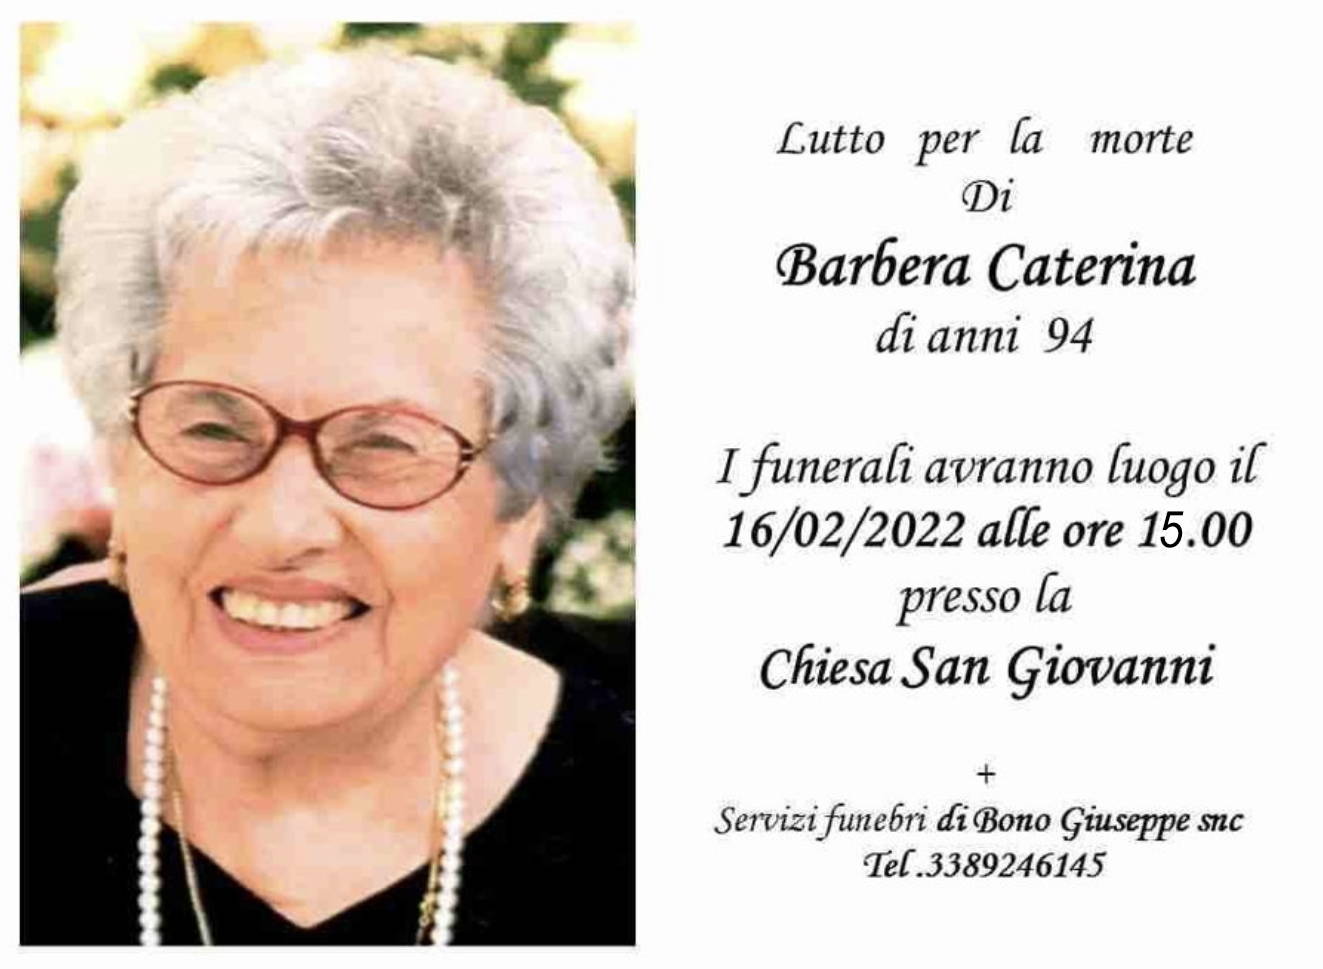 Caterina Barbera